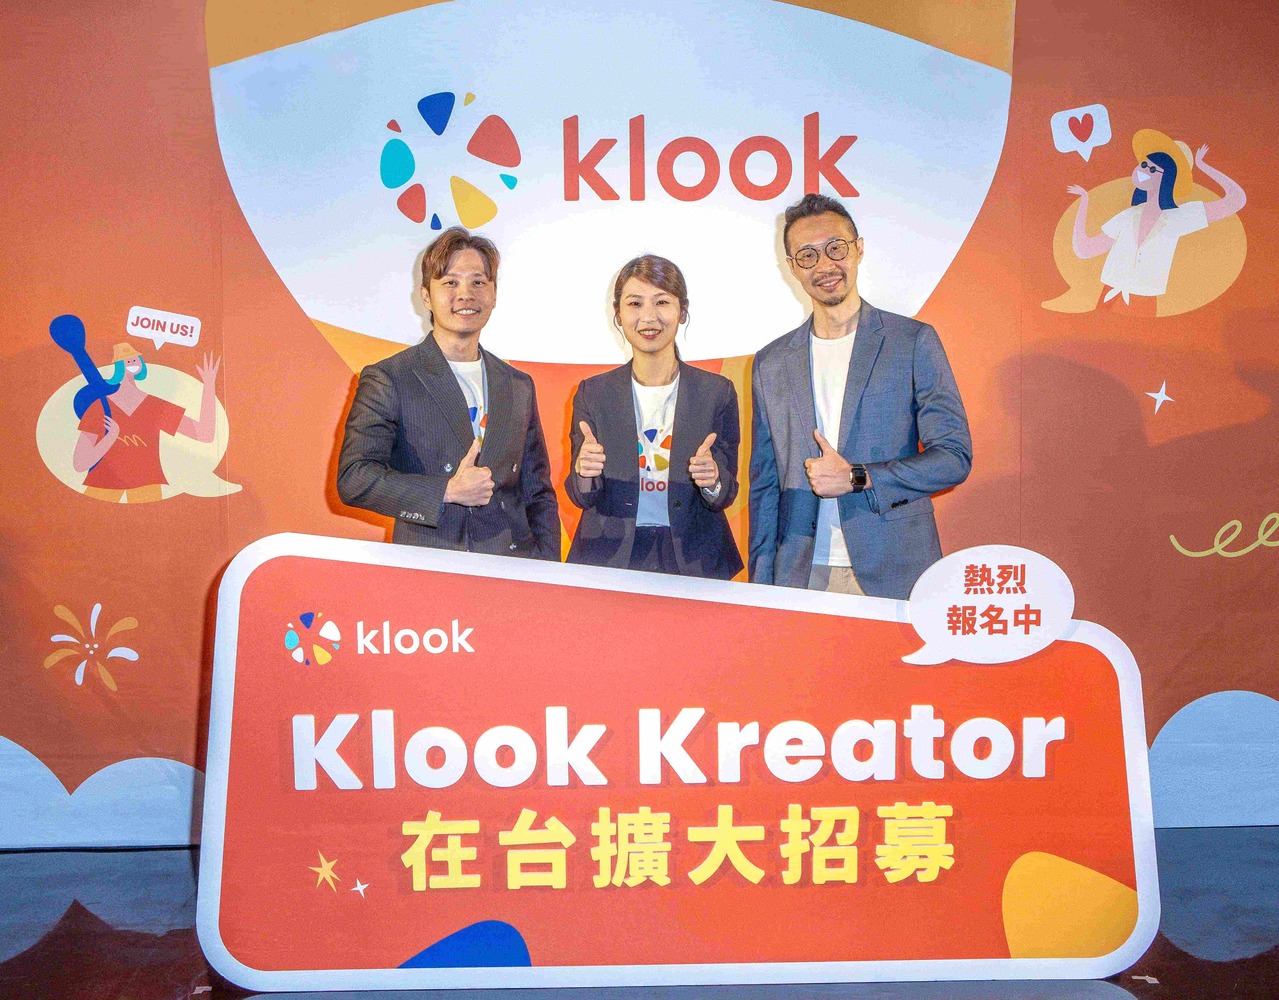 Klook Kreator 计划正式在台展开，号召台湾创作者边旅游边赚钱。 Klook /提供